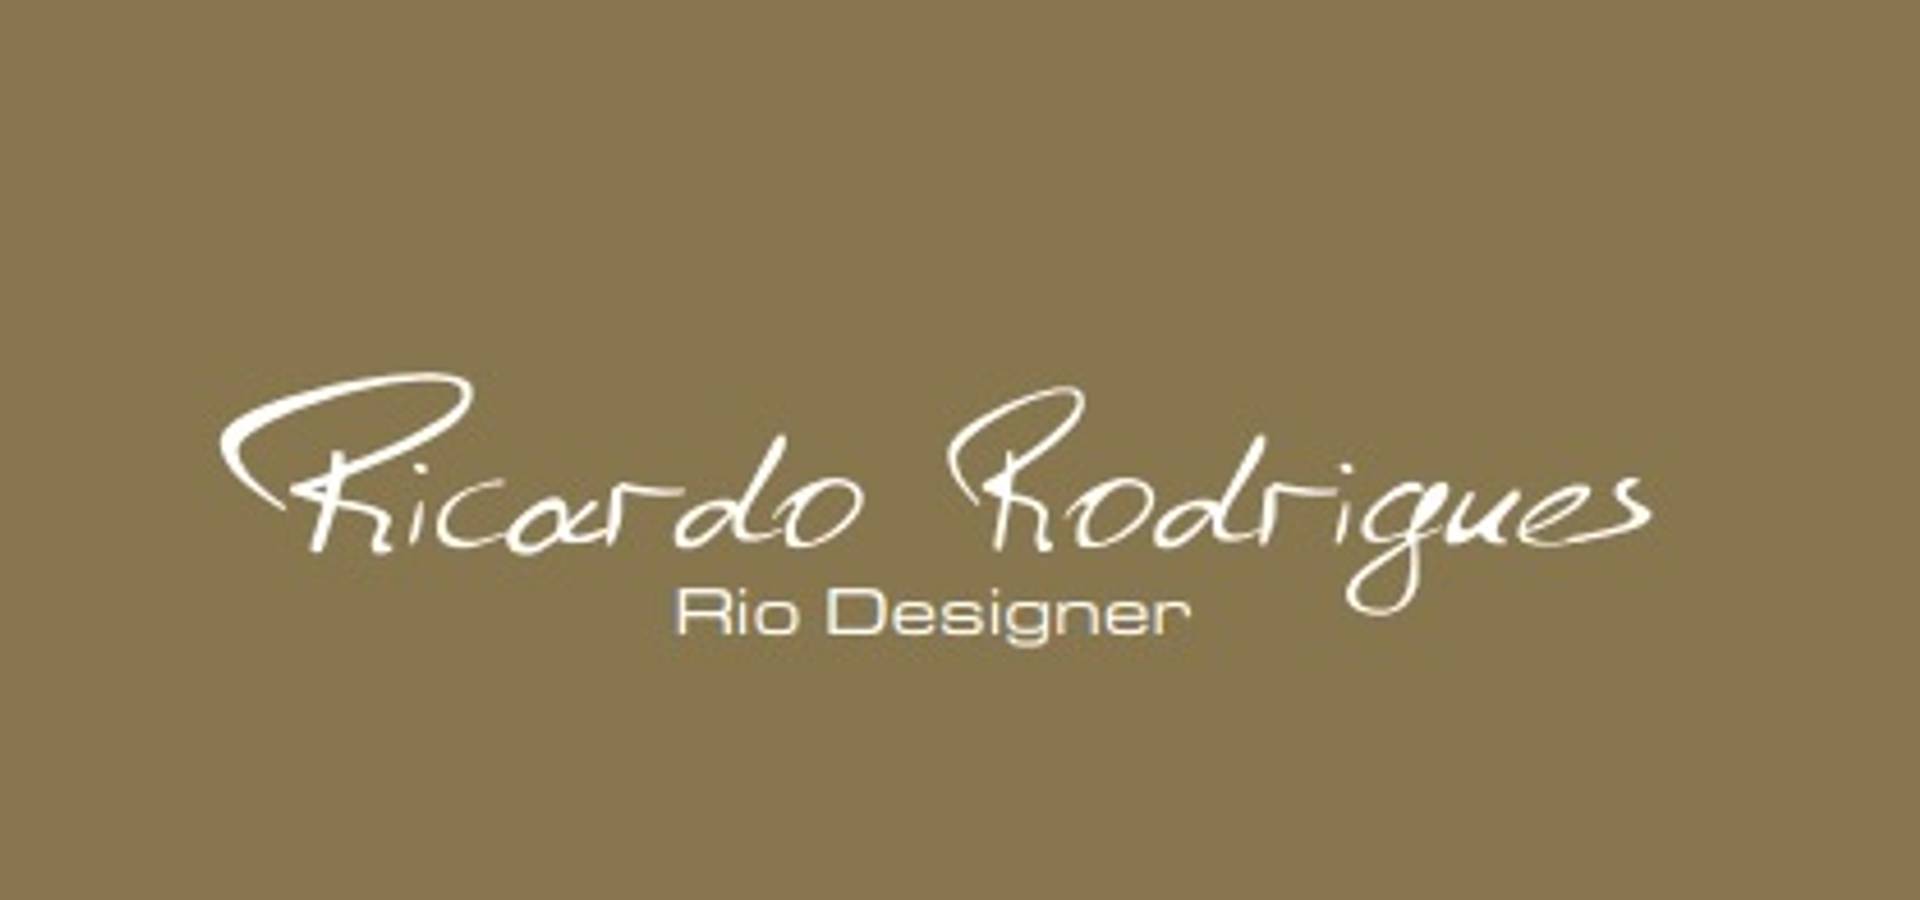 Ricardo Rodrigues—Rio Designer